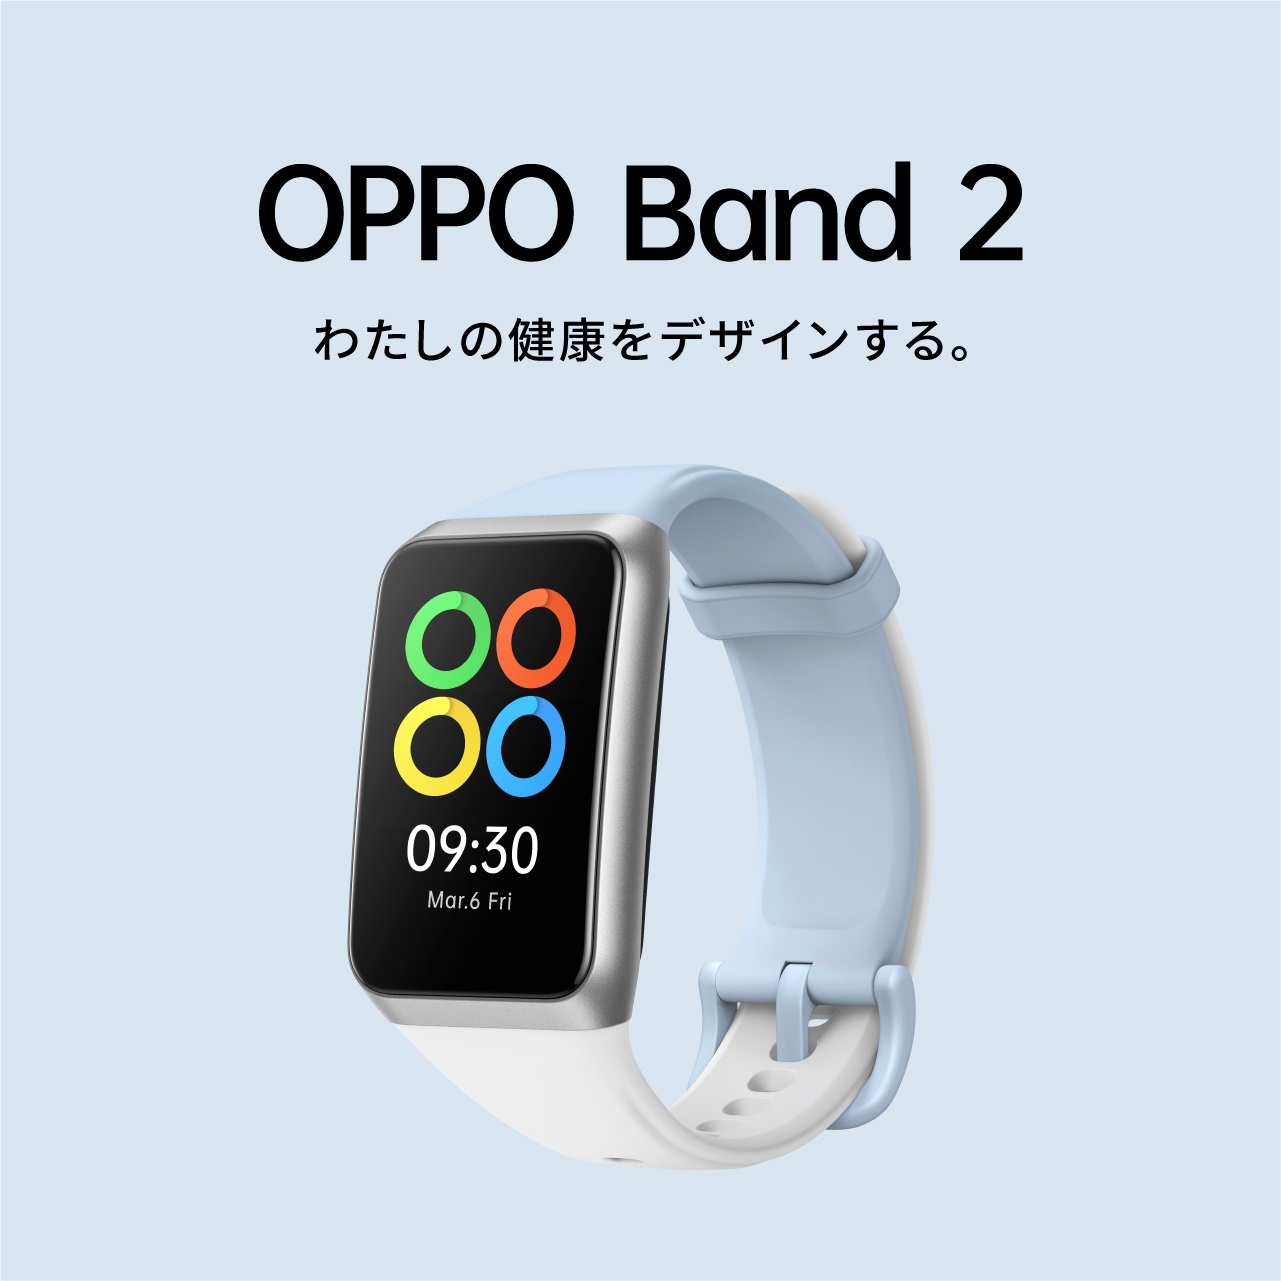 OPPO Band 2 | ウェアラブル | OPPO公式オンラインショップ